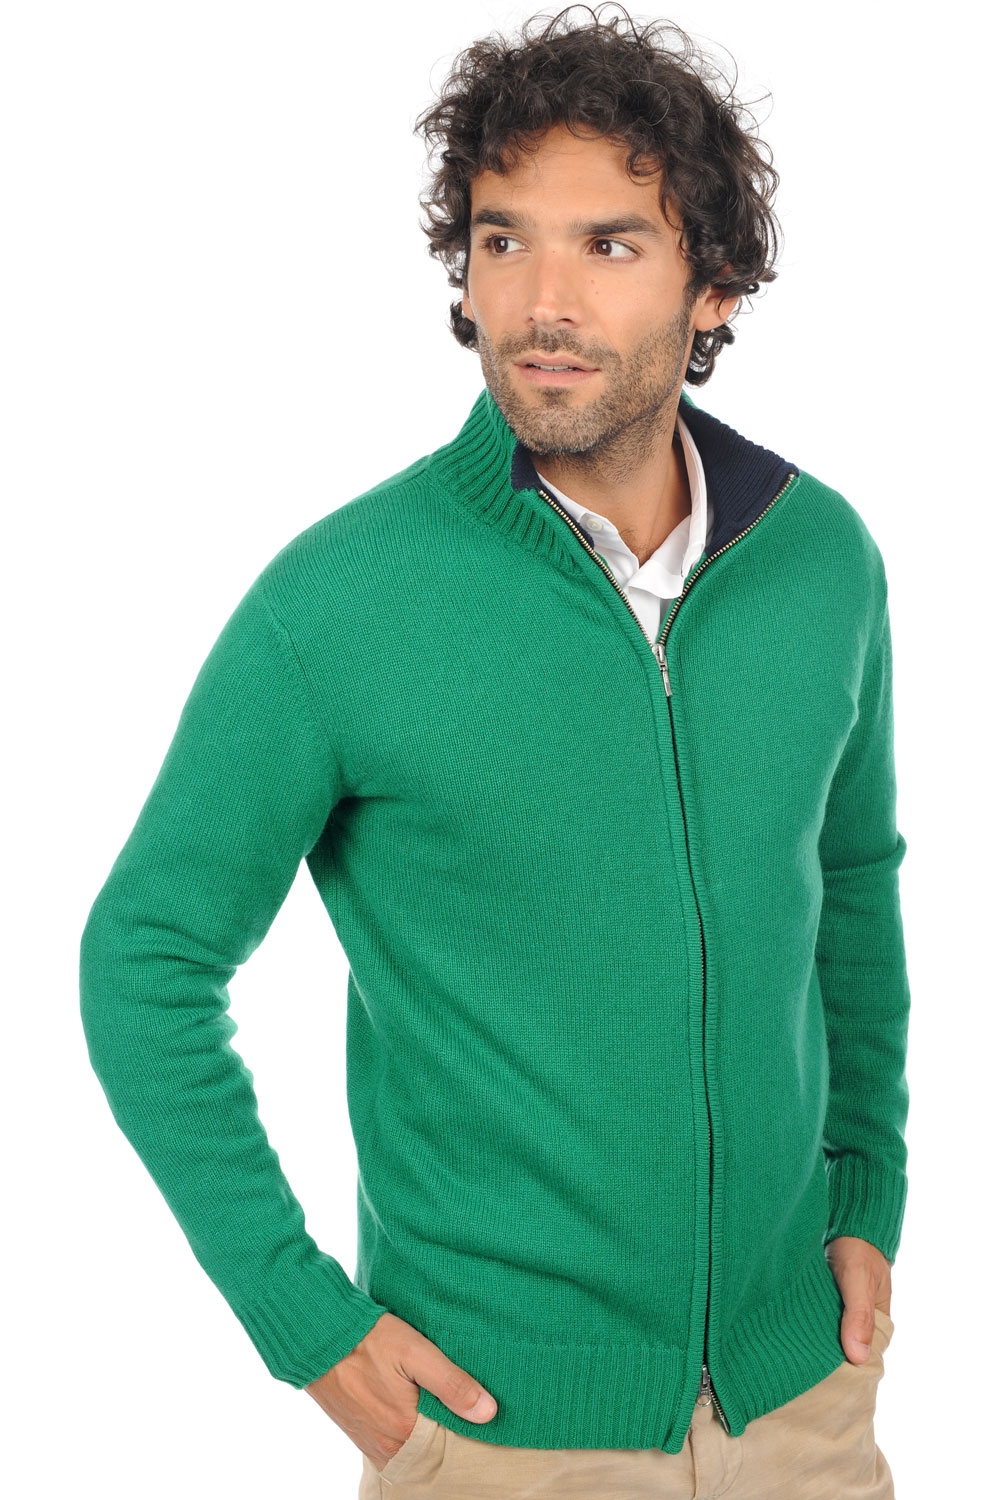 Cashmere men waistcoat sleeveless sweaters maxime evergreen dress blue s